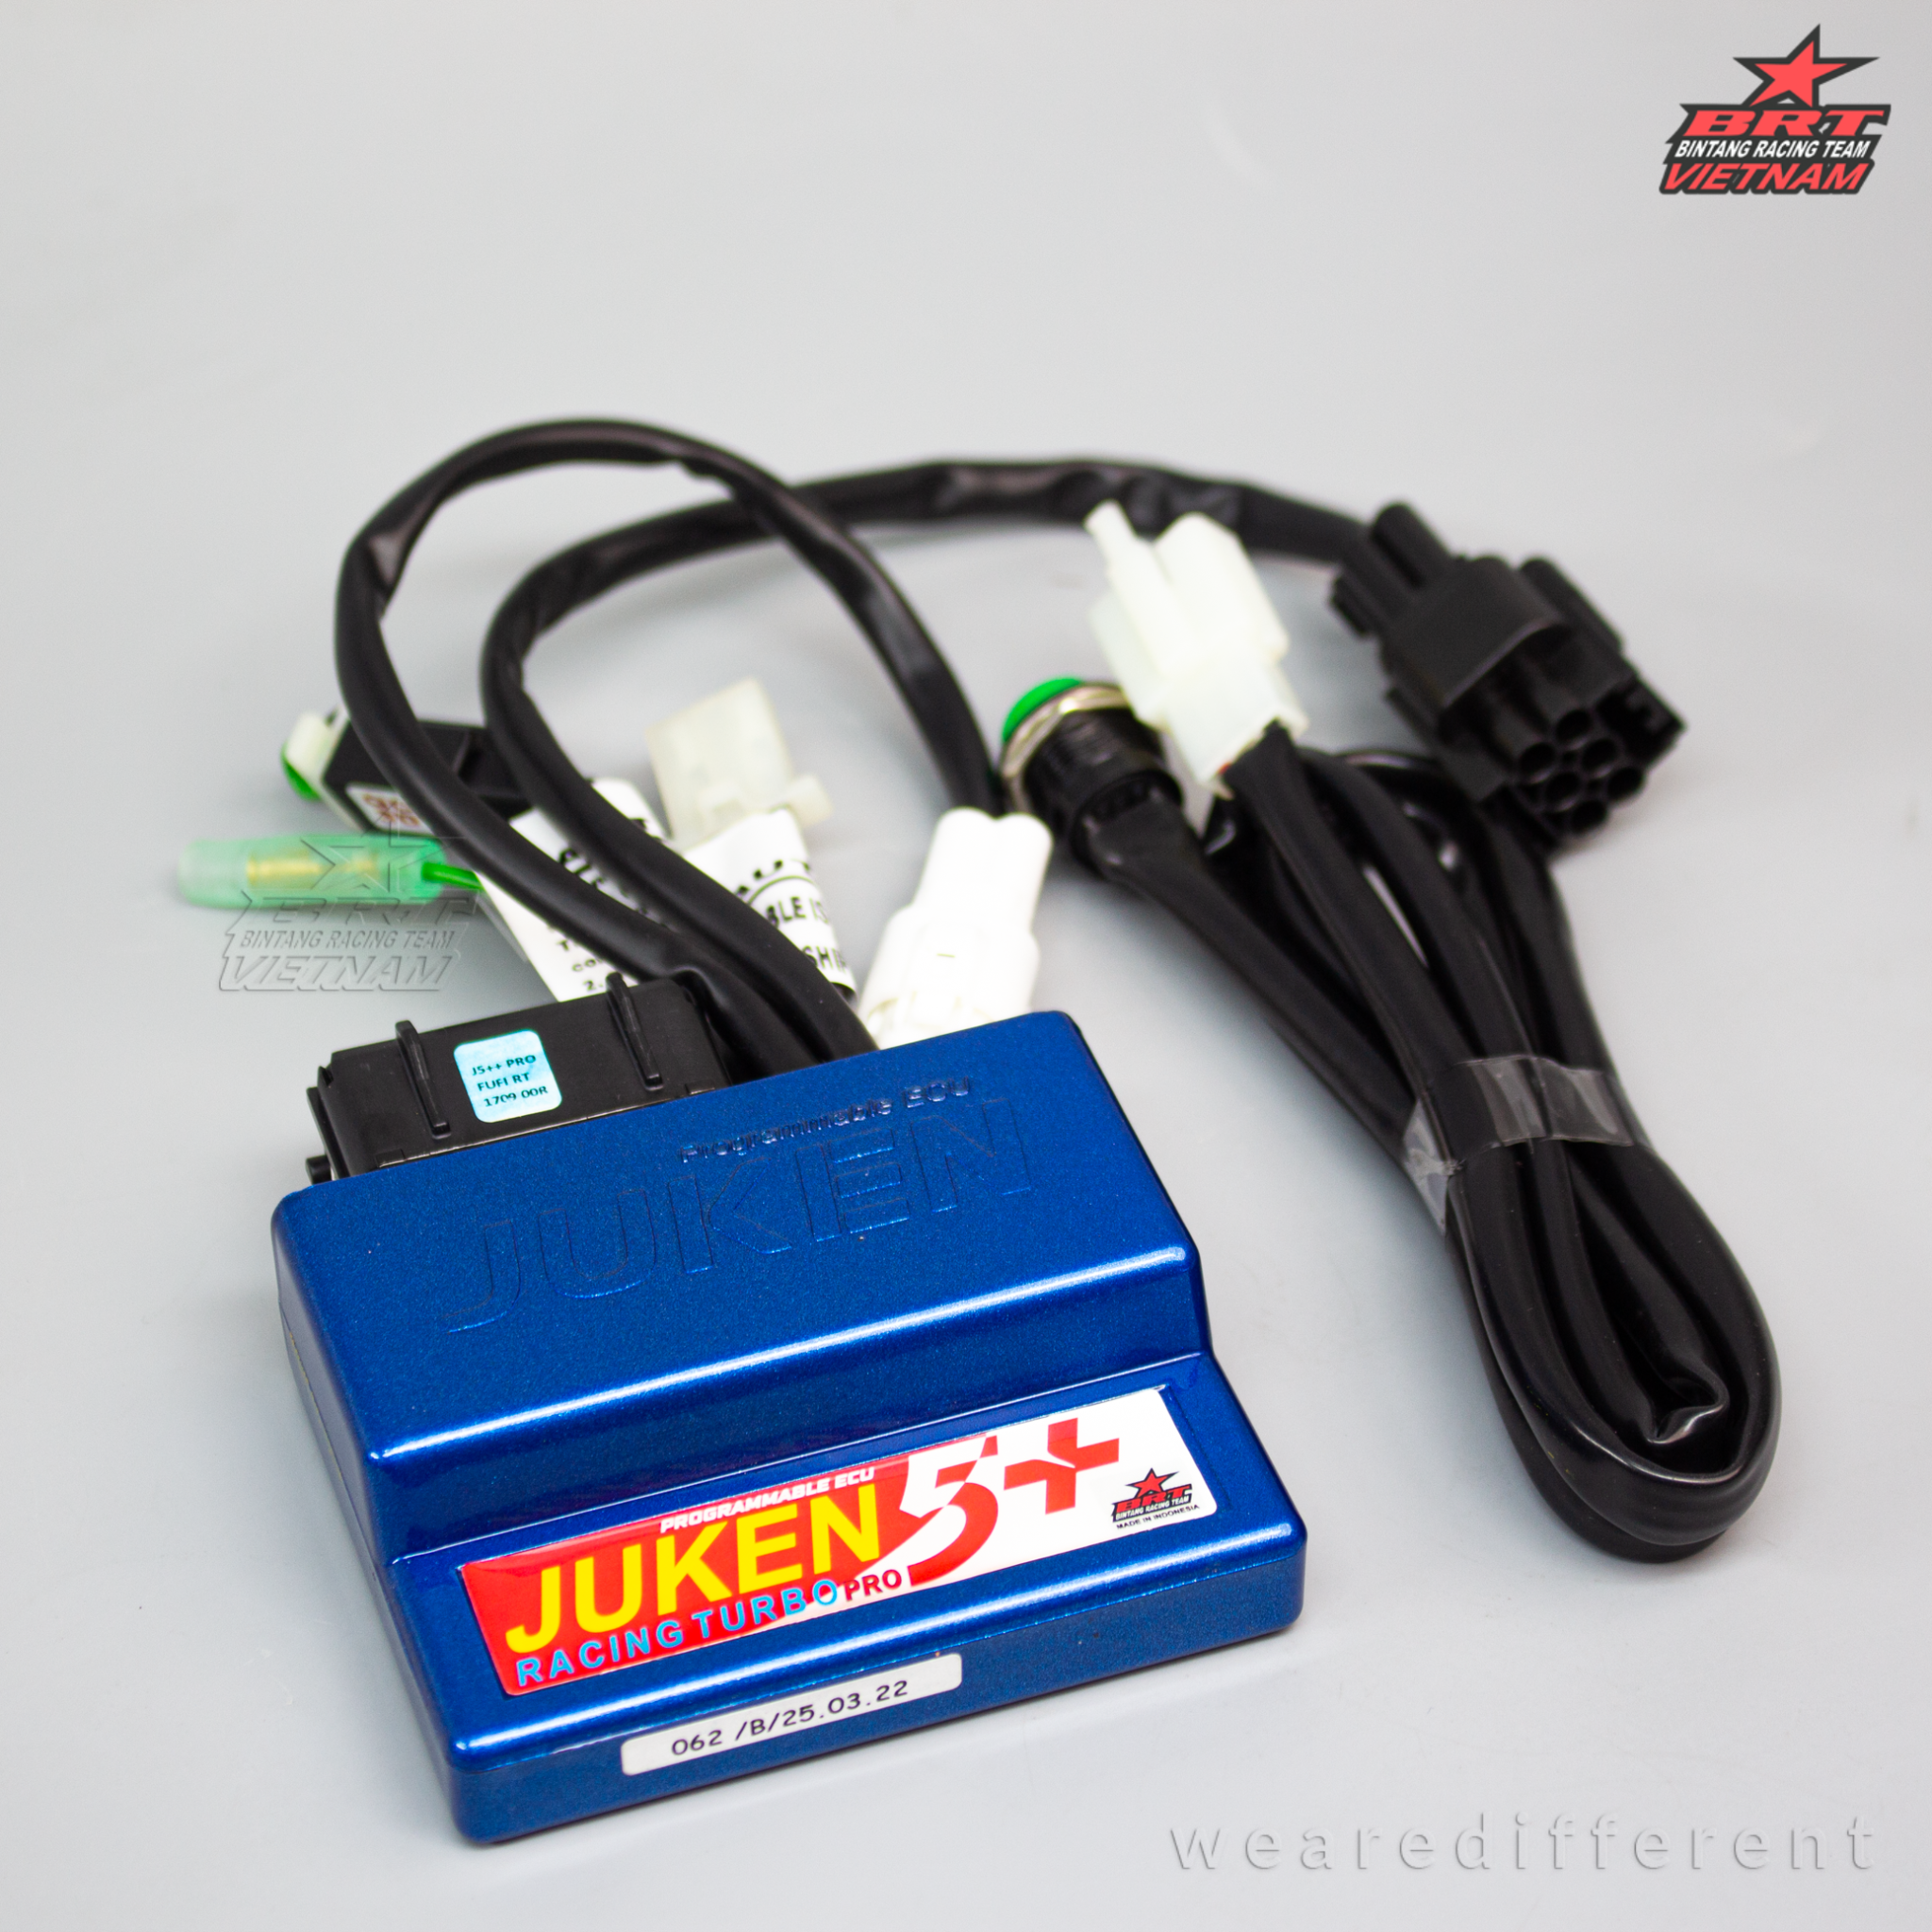  ECU Juken 5++ Pro Turbo MSX 